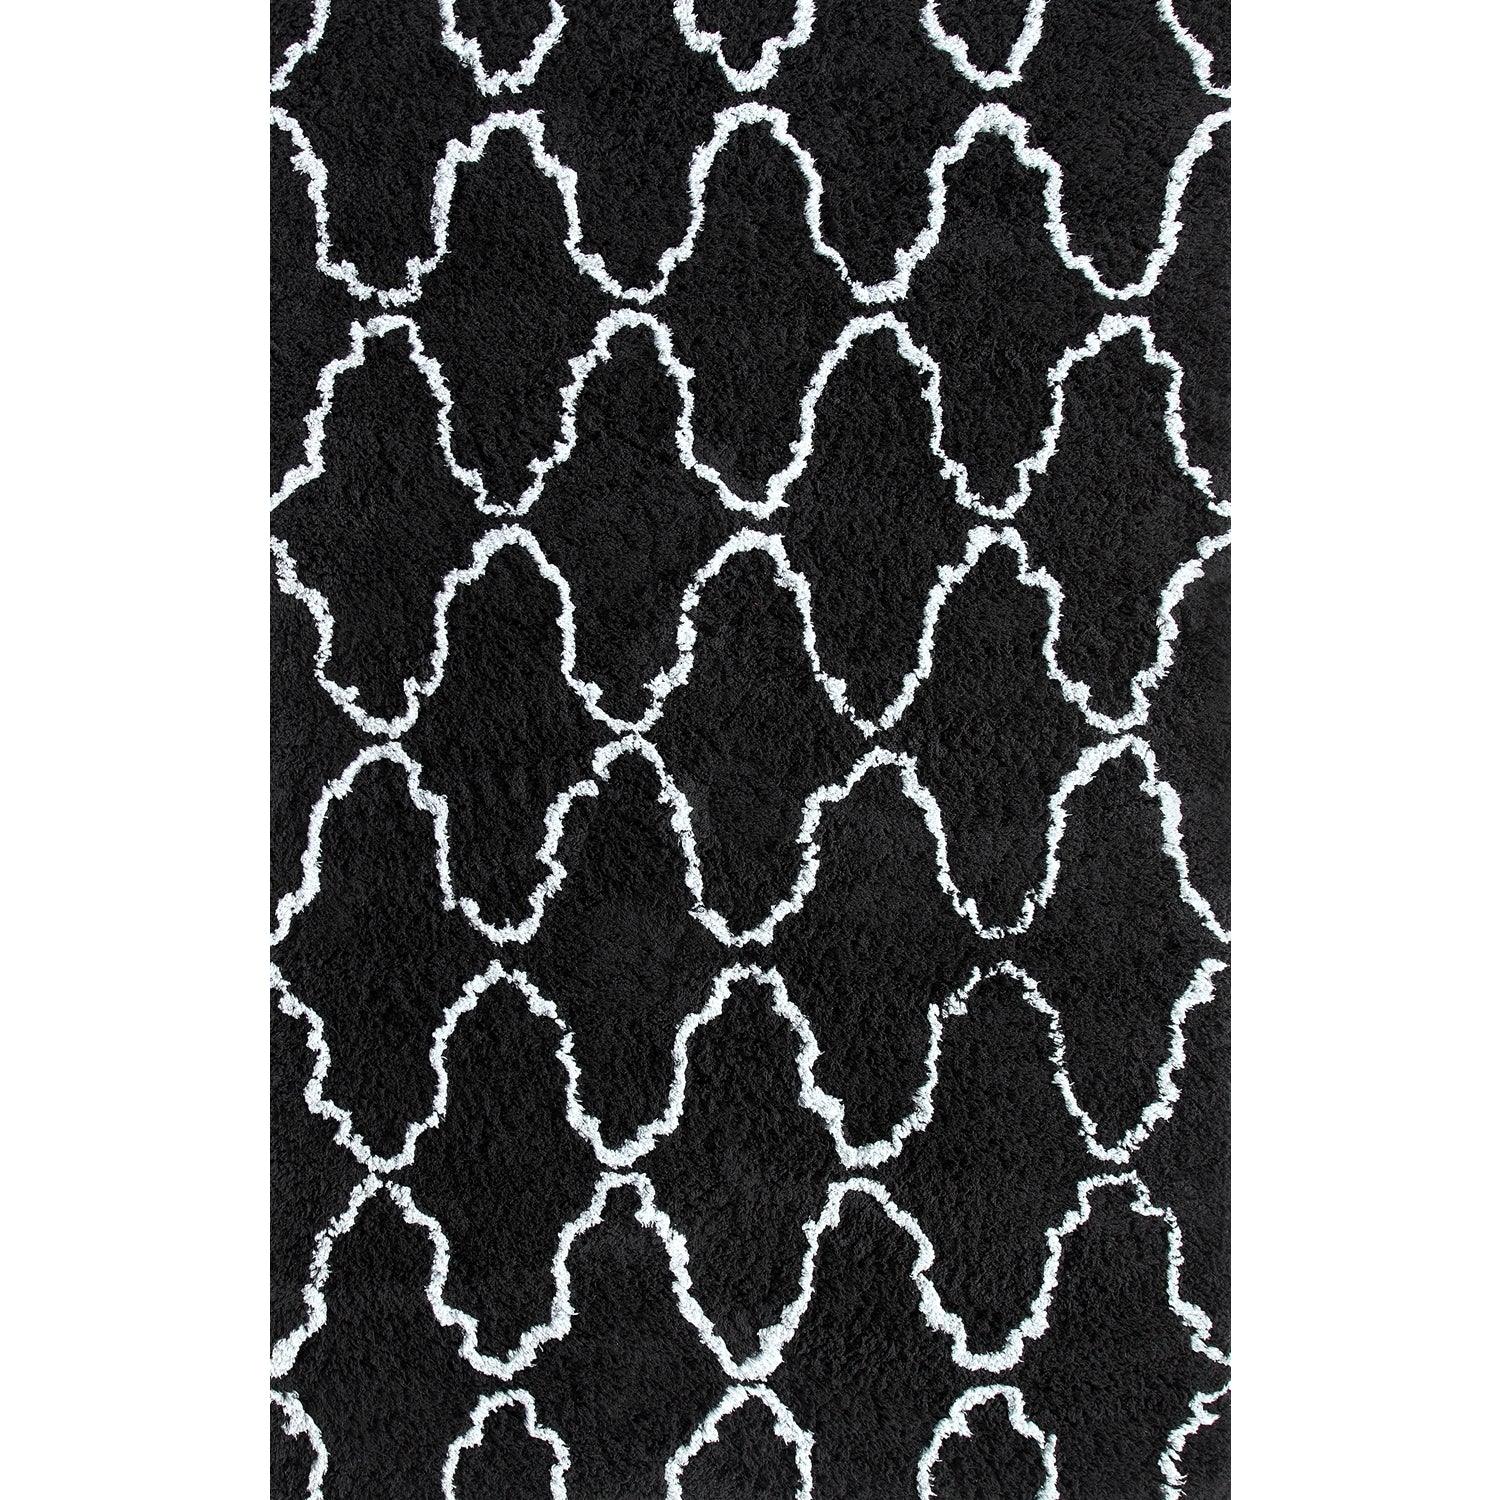  Superior Hand-Tufted Trellis Shag Area Rug - Black/Silver